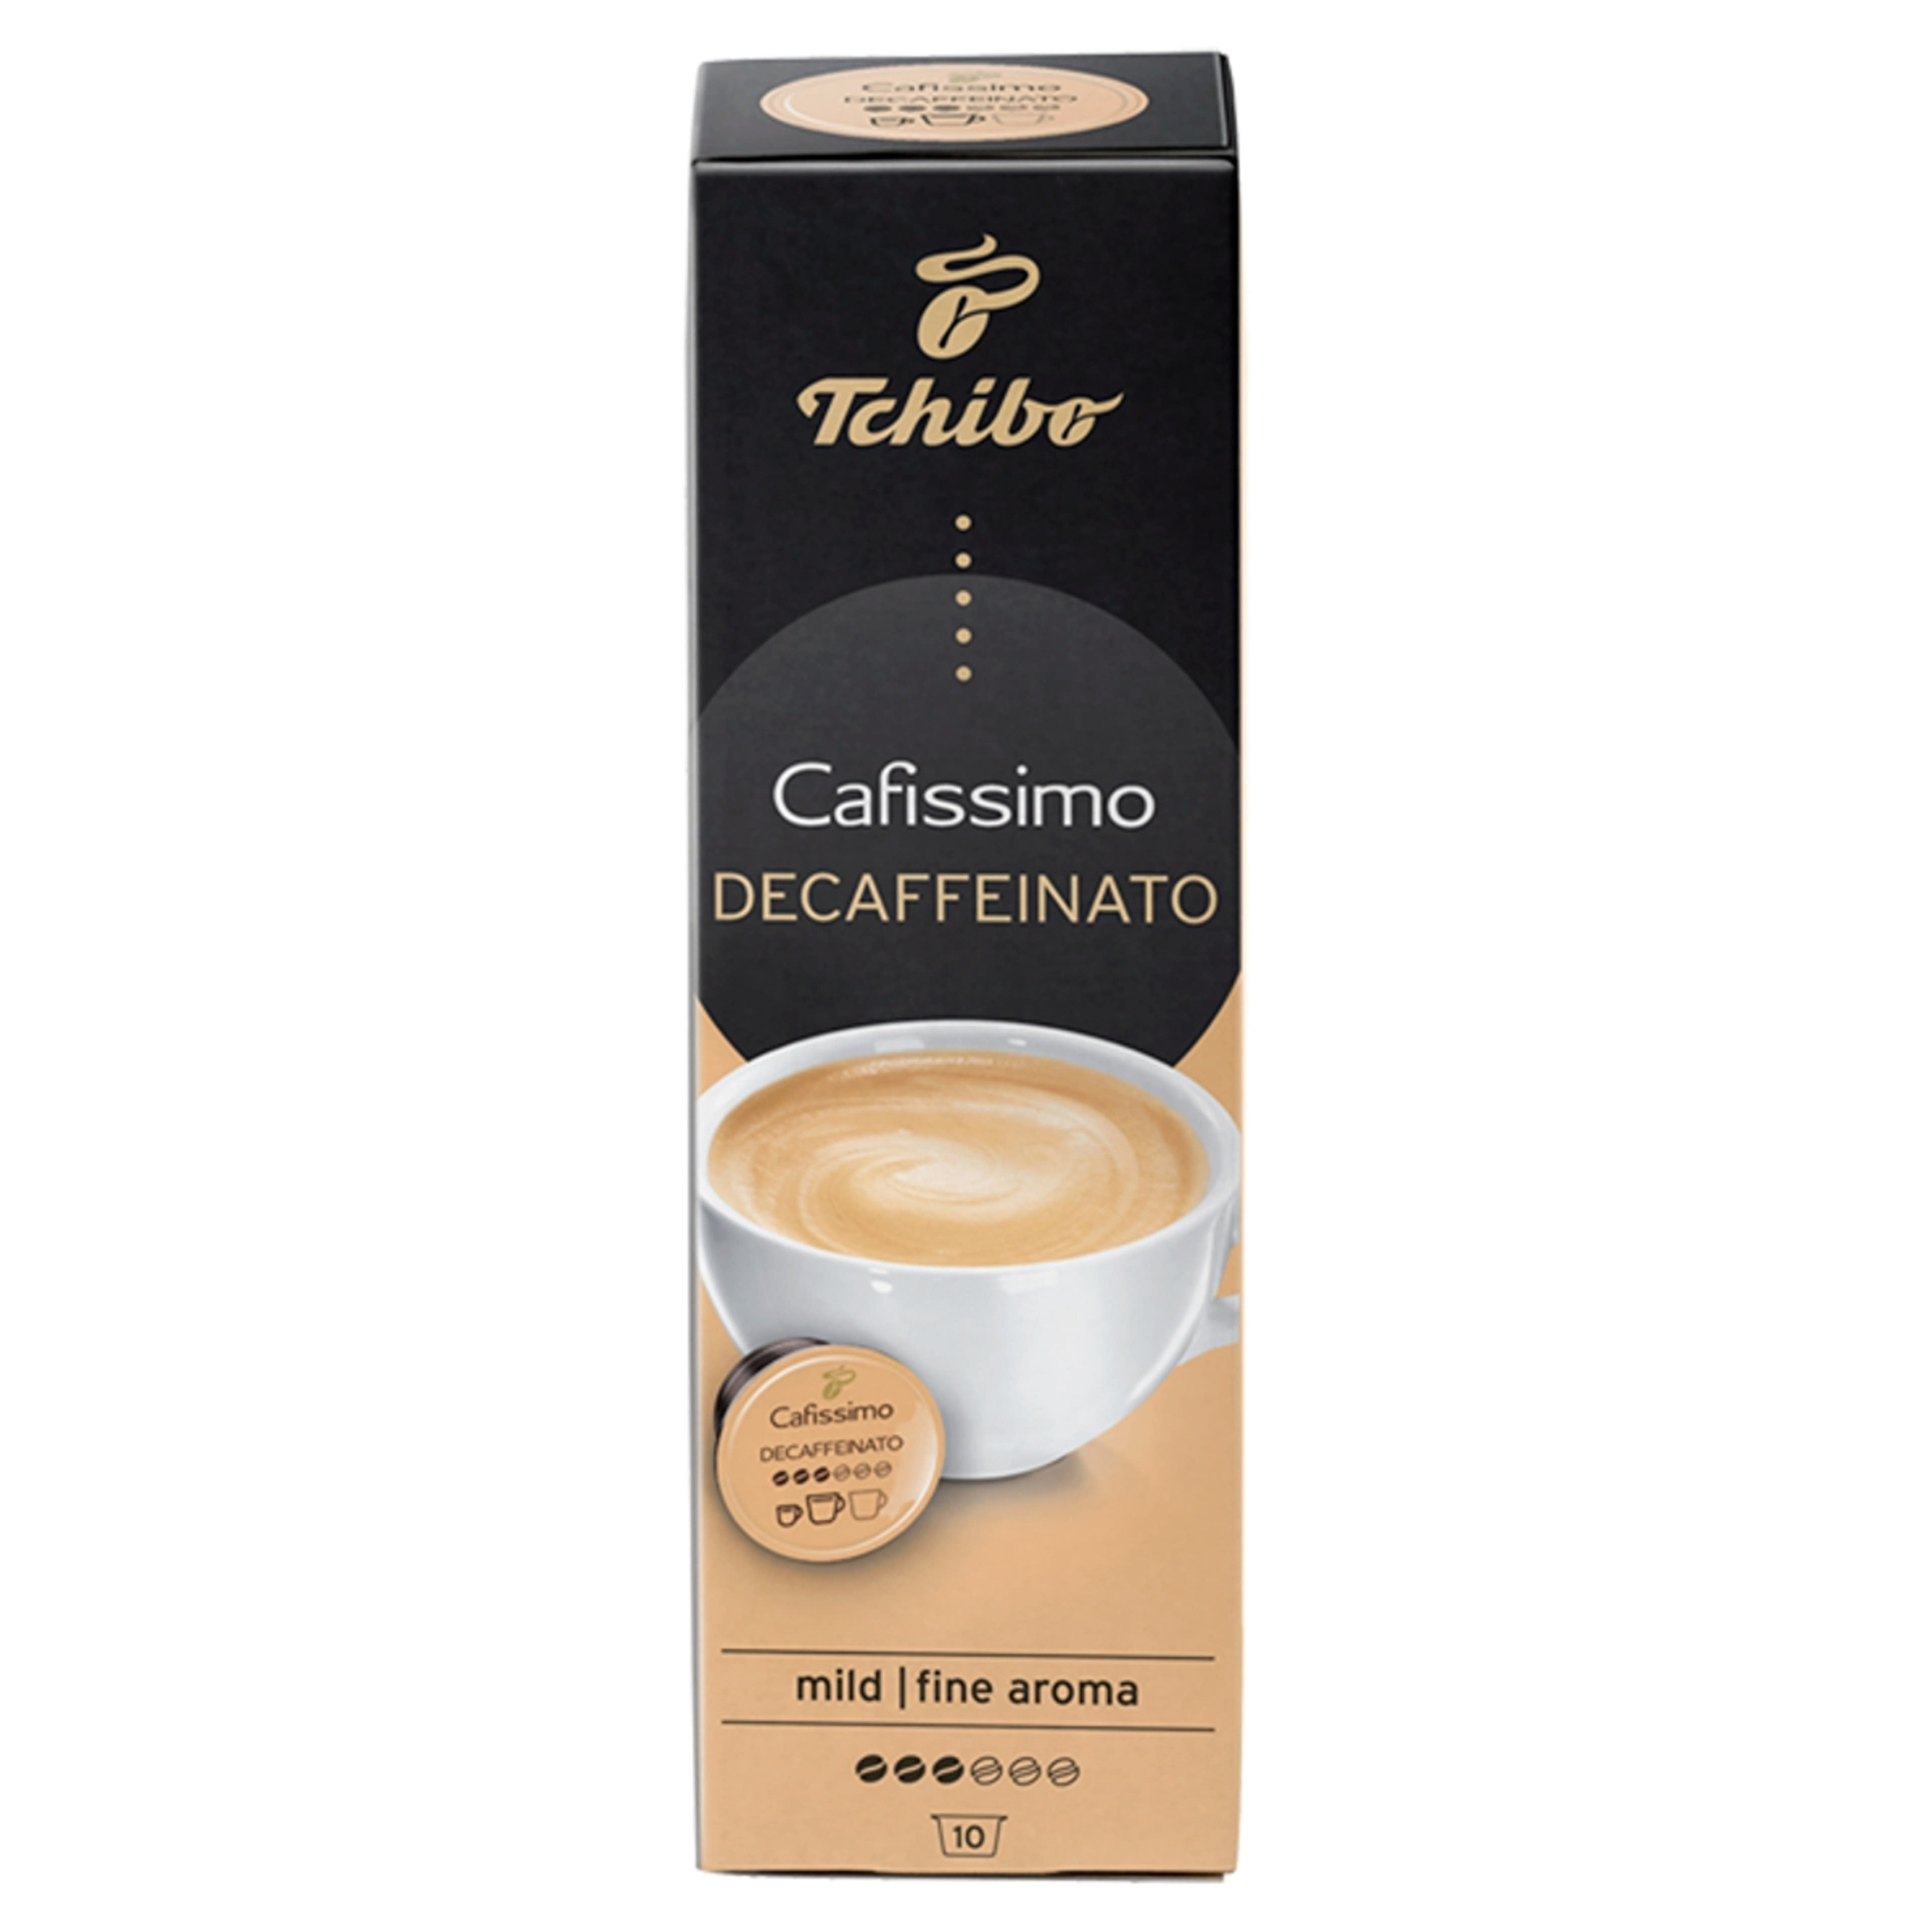 Tchibo Caffe Crema Decaffeinated kávékapszula - 70 g